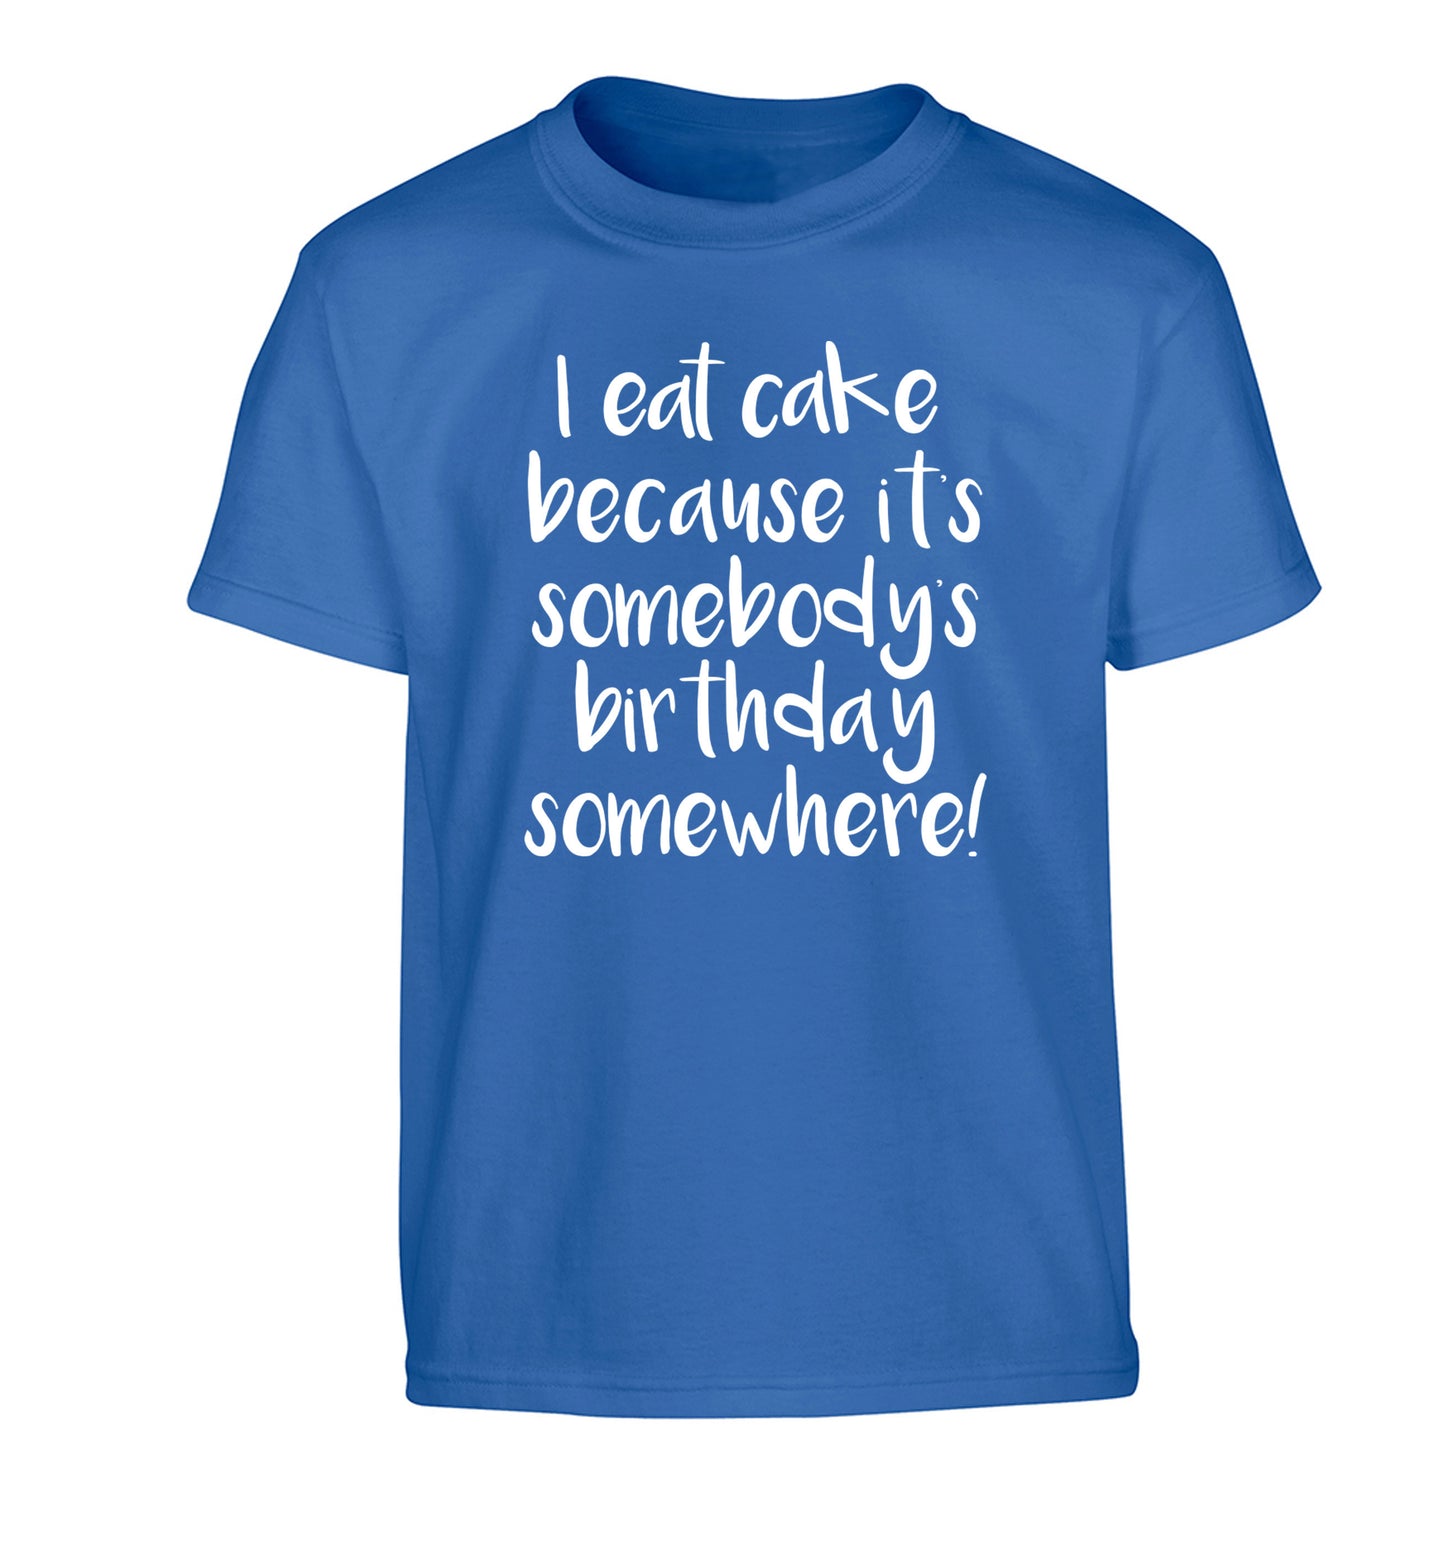 I eat cake because it's somebody's birthday somewhere! Children's blue Tshirt 12-14 Years